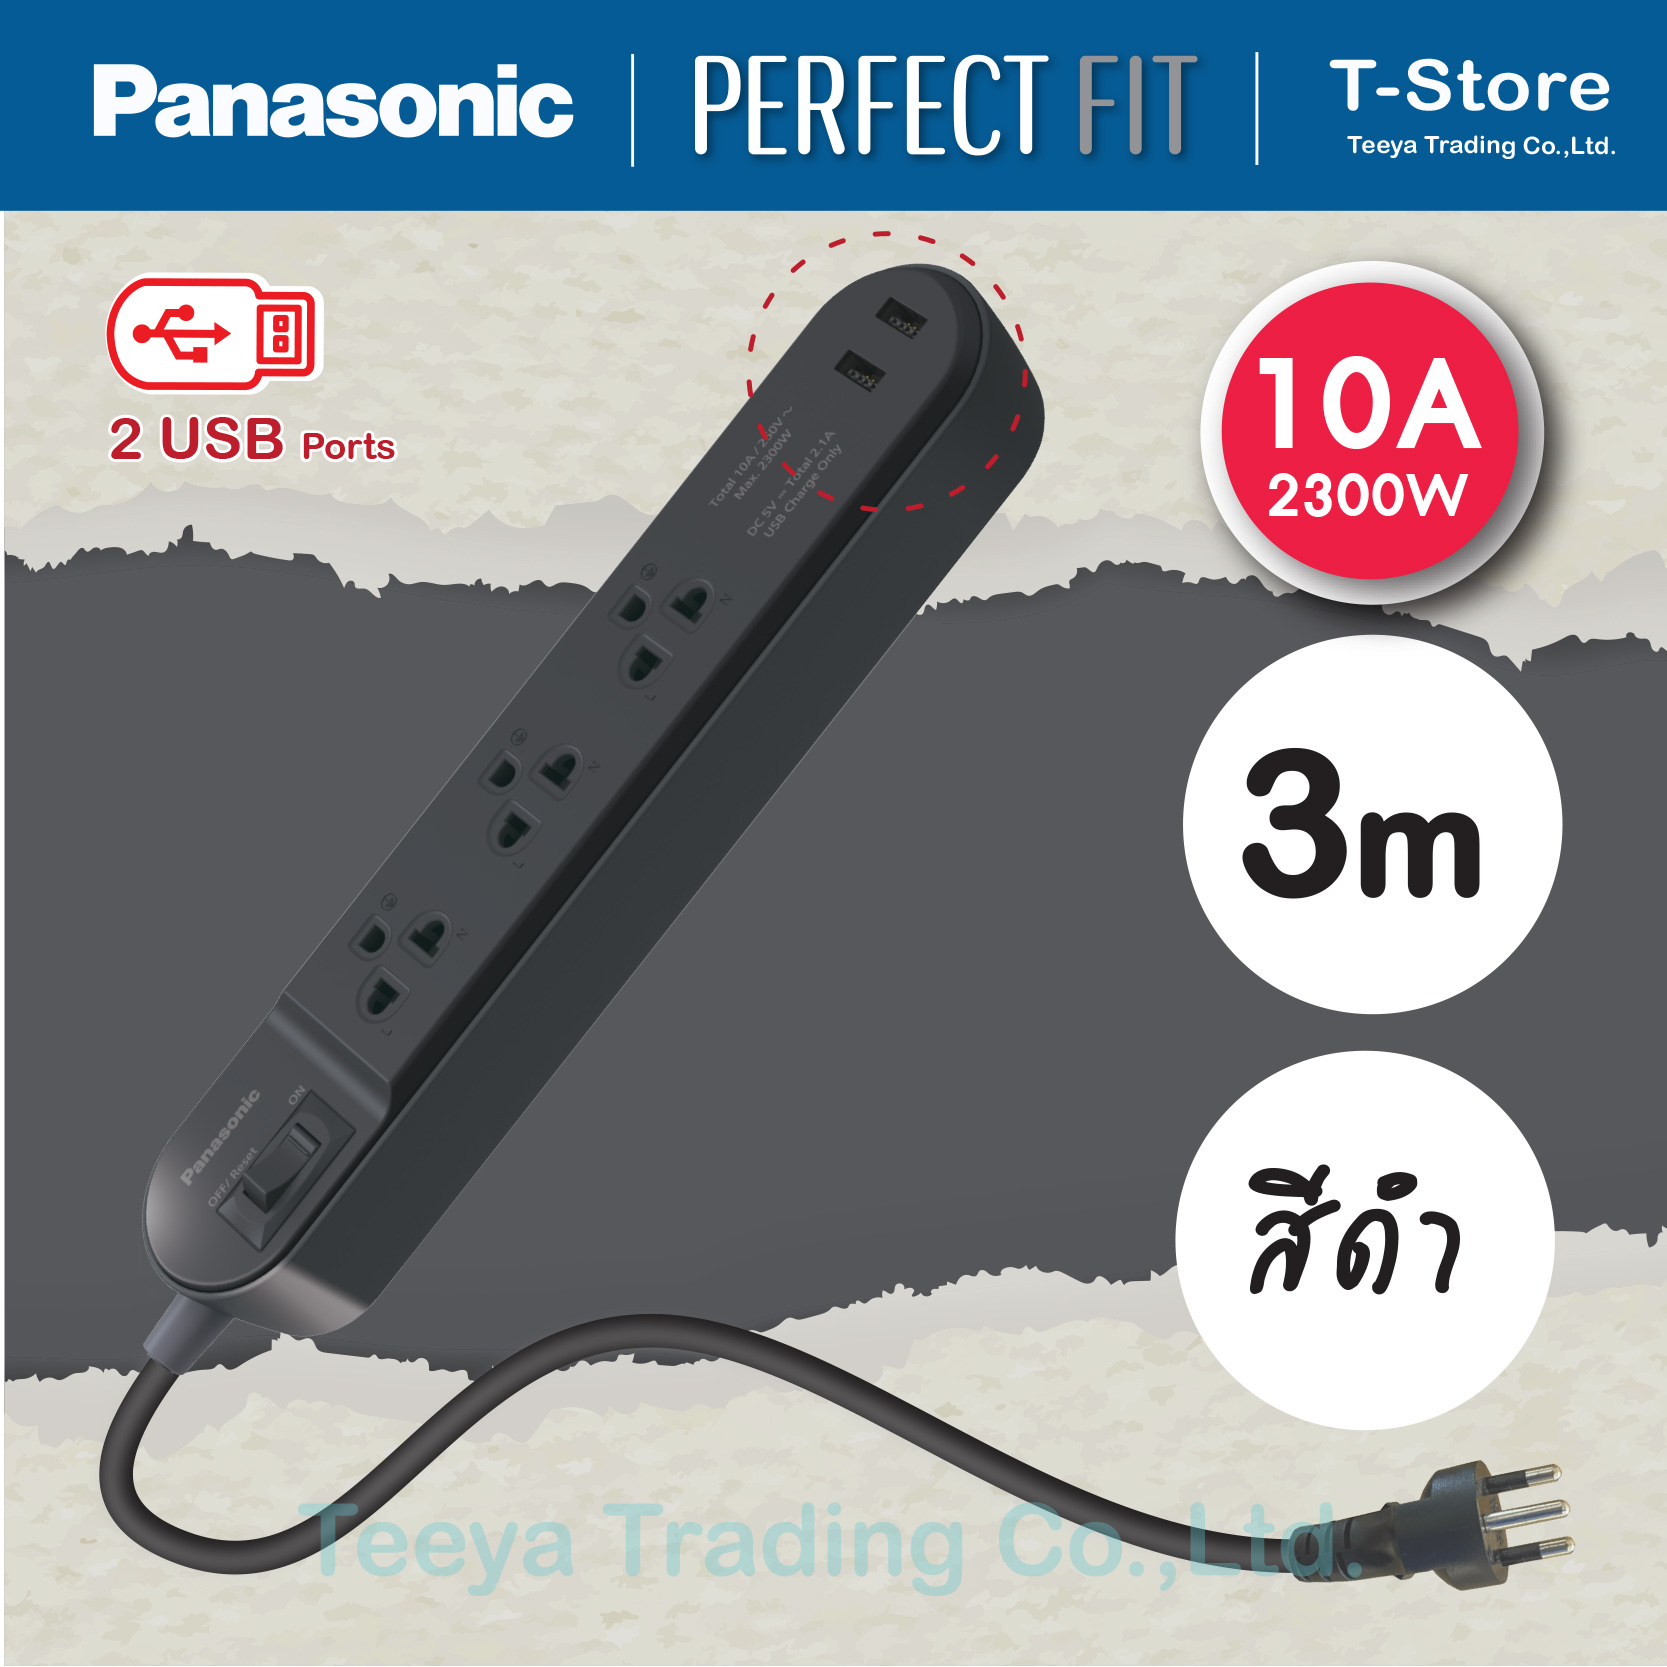 Panasonic Perfect FIT "USB"  รุ่น WCHG 243322  ปลั๊กพ่วง 3 เต้ารับ 1 สวิตช์คุมเมน  2 ช่องชาร์จ USB 5V 2A   10A 2300W   สายยาว 3 M (มีสินค้าพร้อมส่ง สั่งซื้อได้เลย)